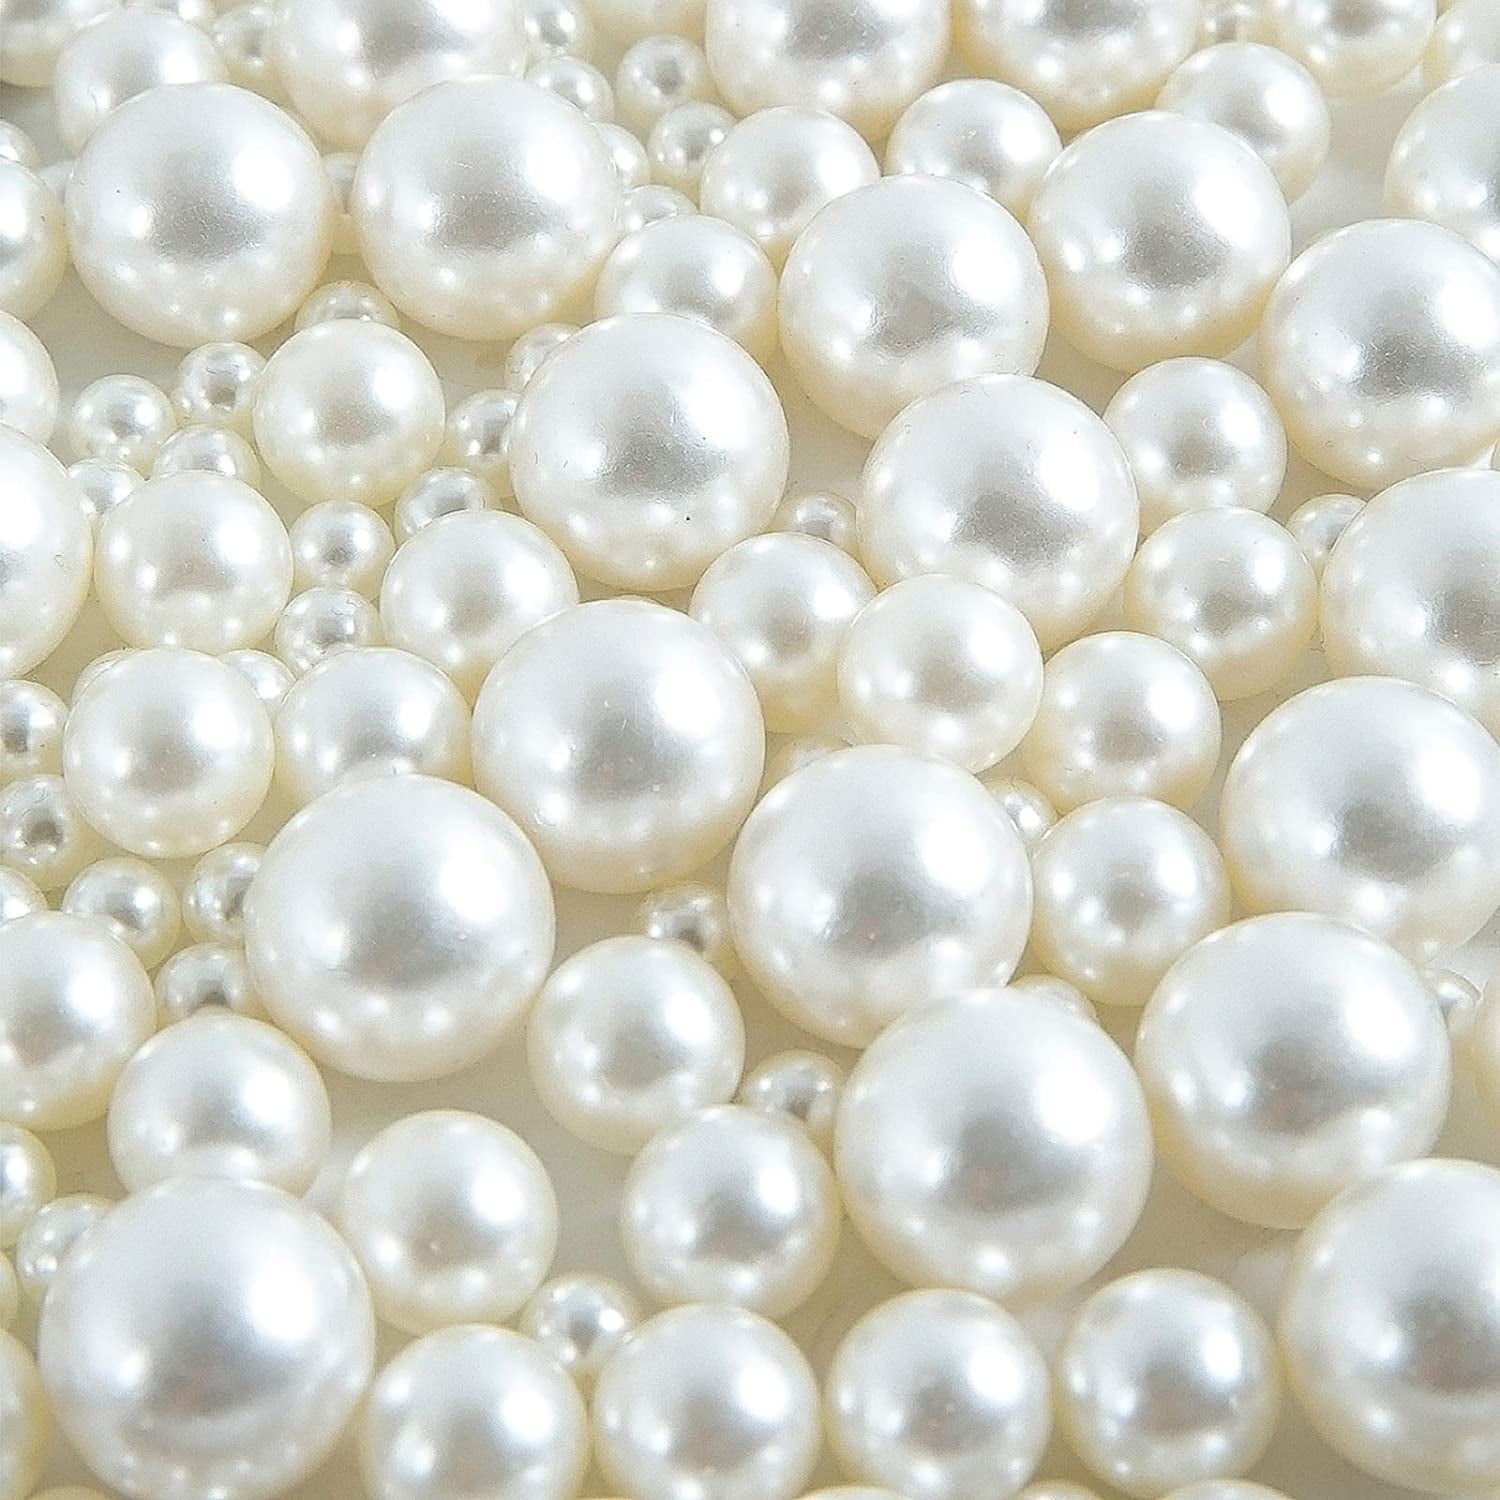 Pearl Vase Filler Plastic Faux Beads Wedding Party Table Decor Centerpieces Mix 